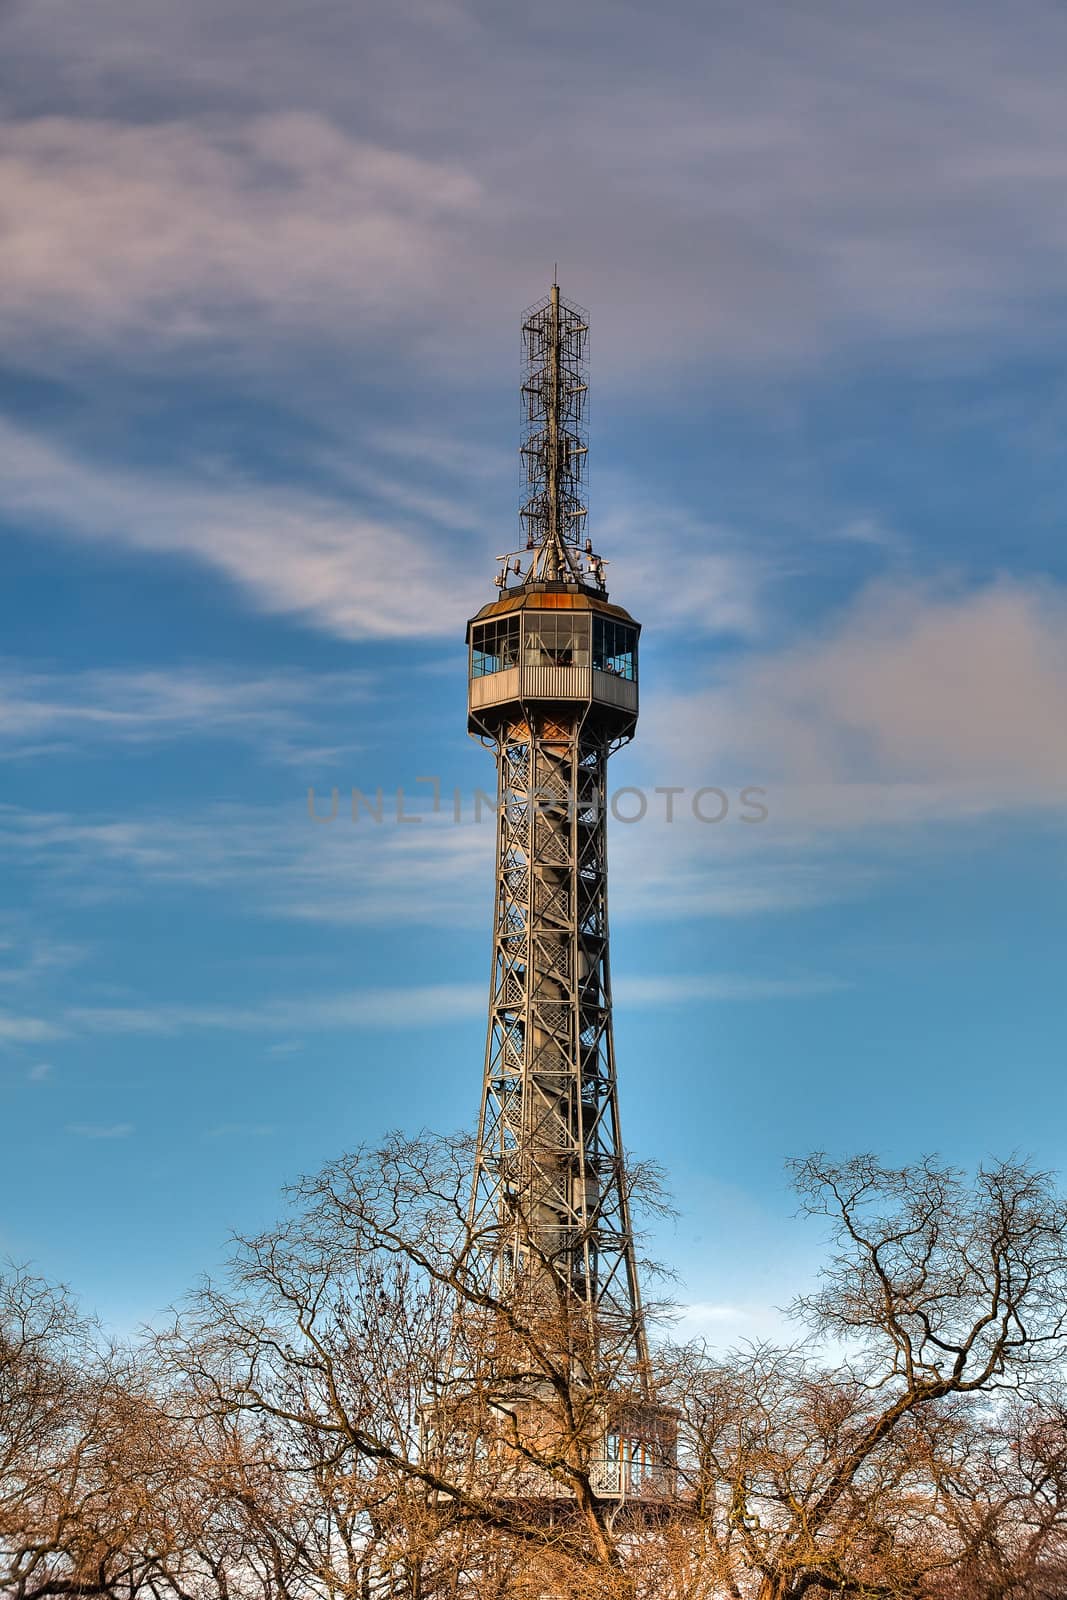 Prague Lookout Tower by CaptureLight